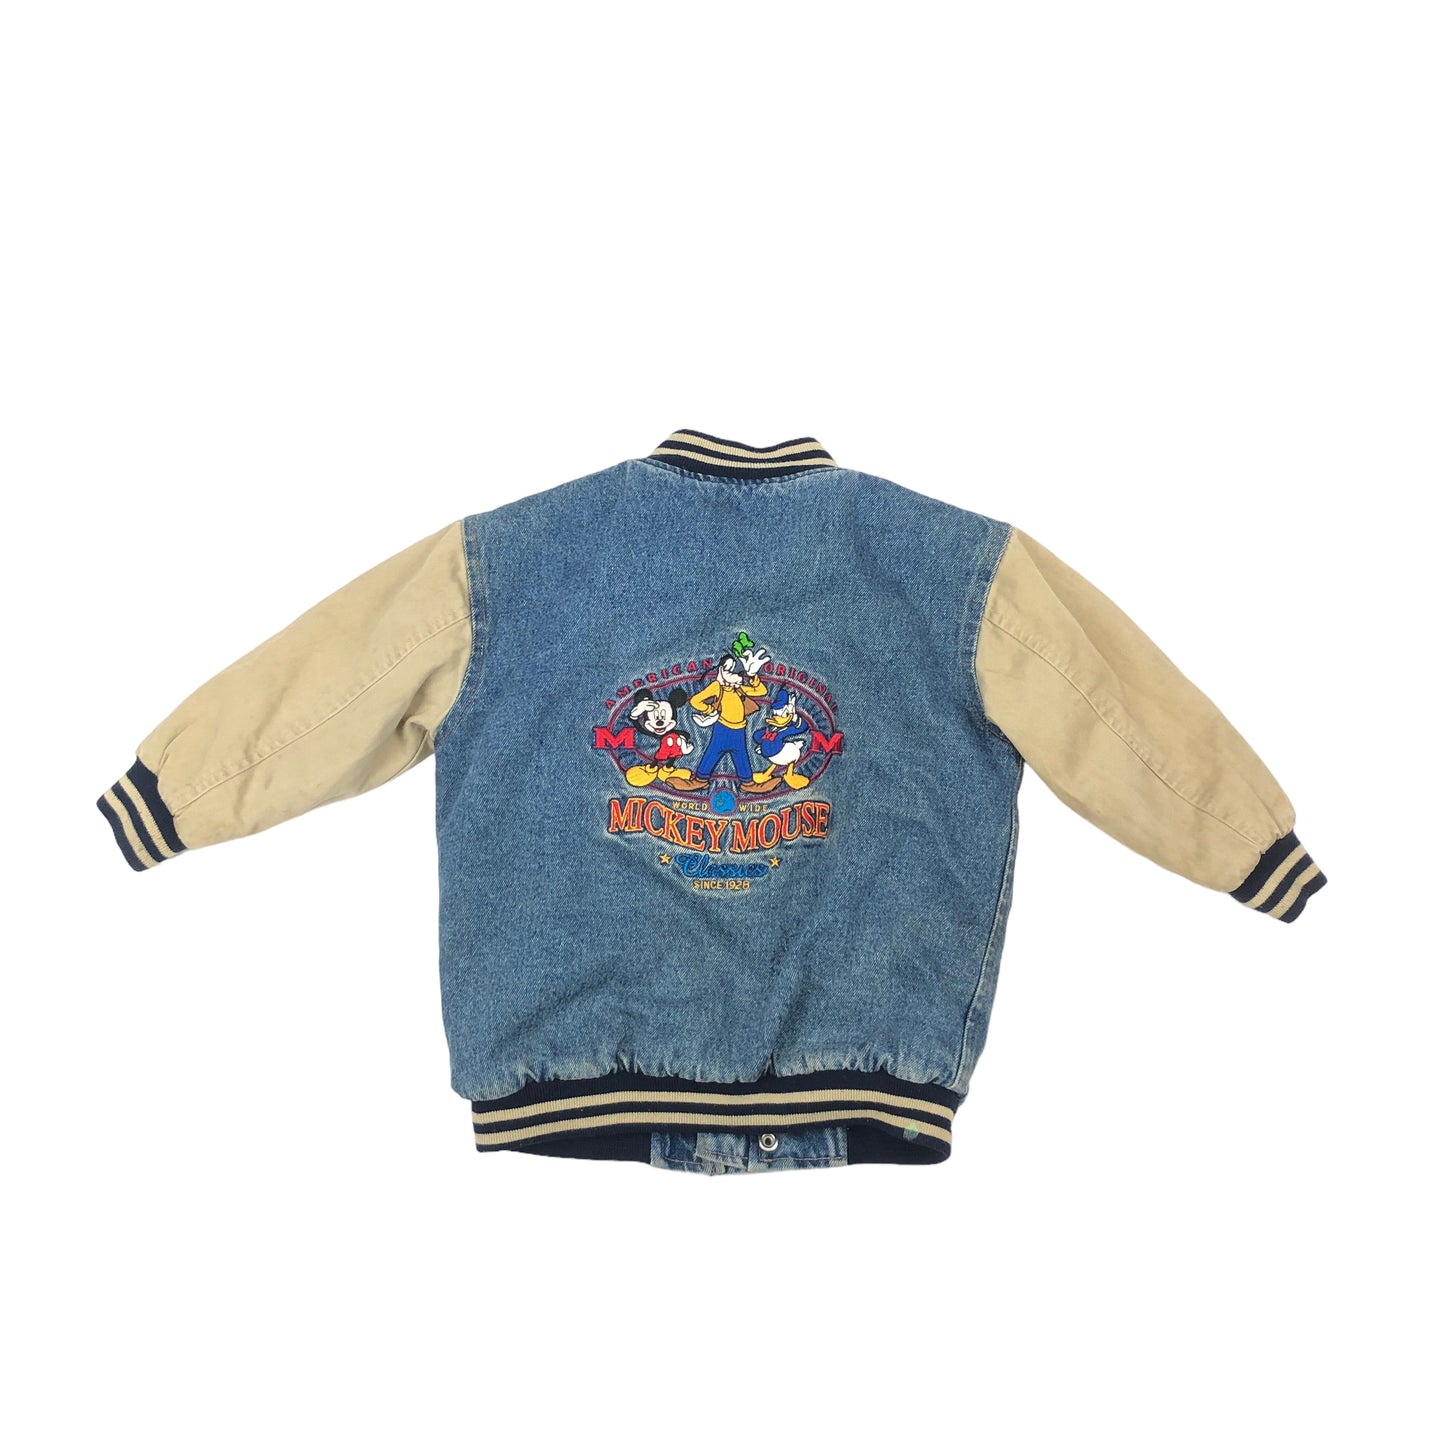 Vintage Disney Denim Baseball Jacket (Age 2-3)